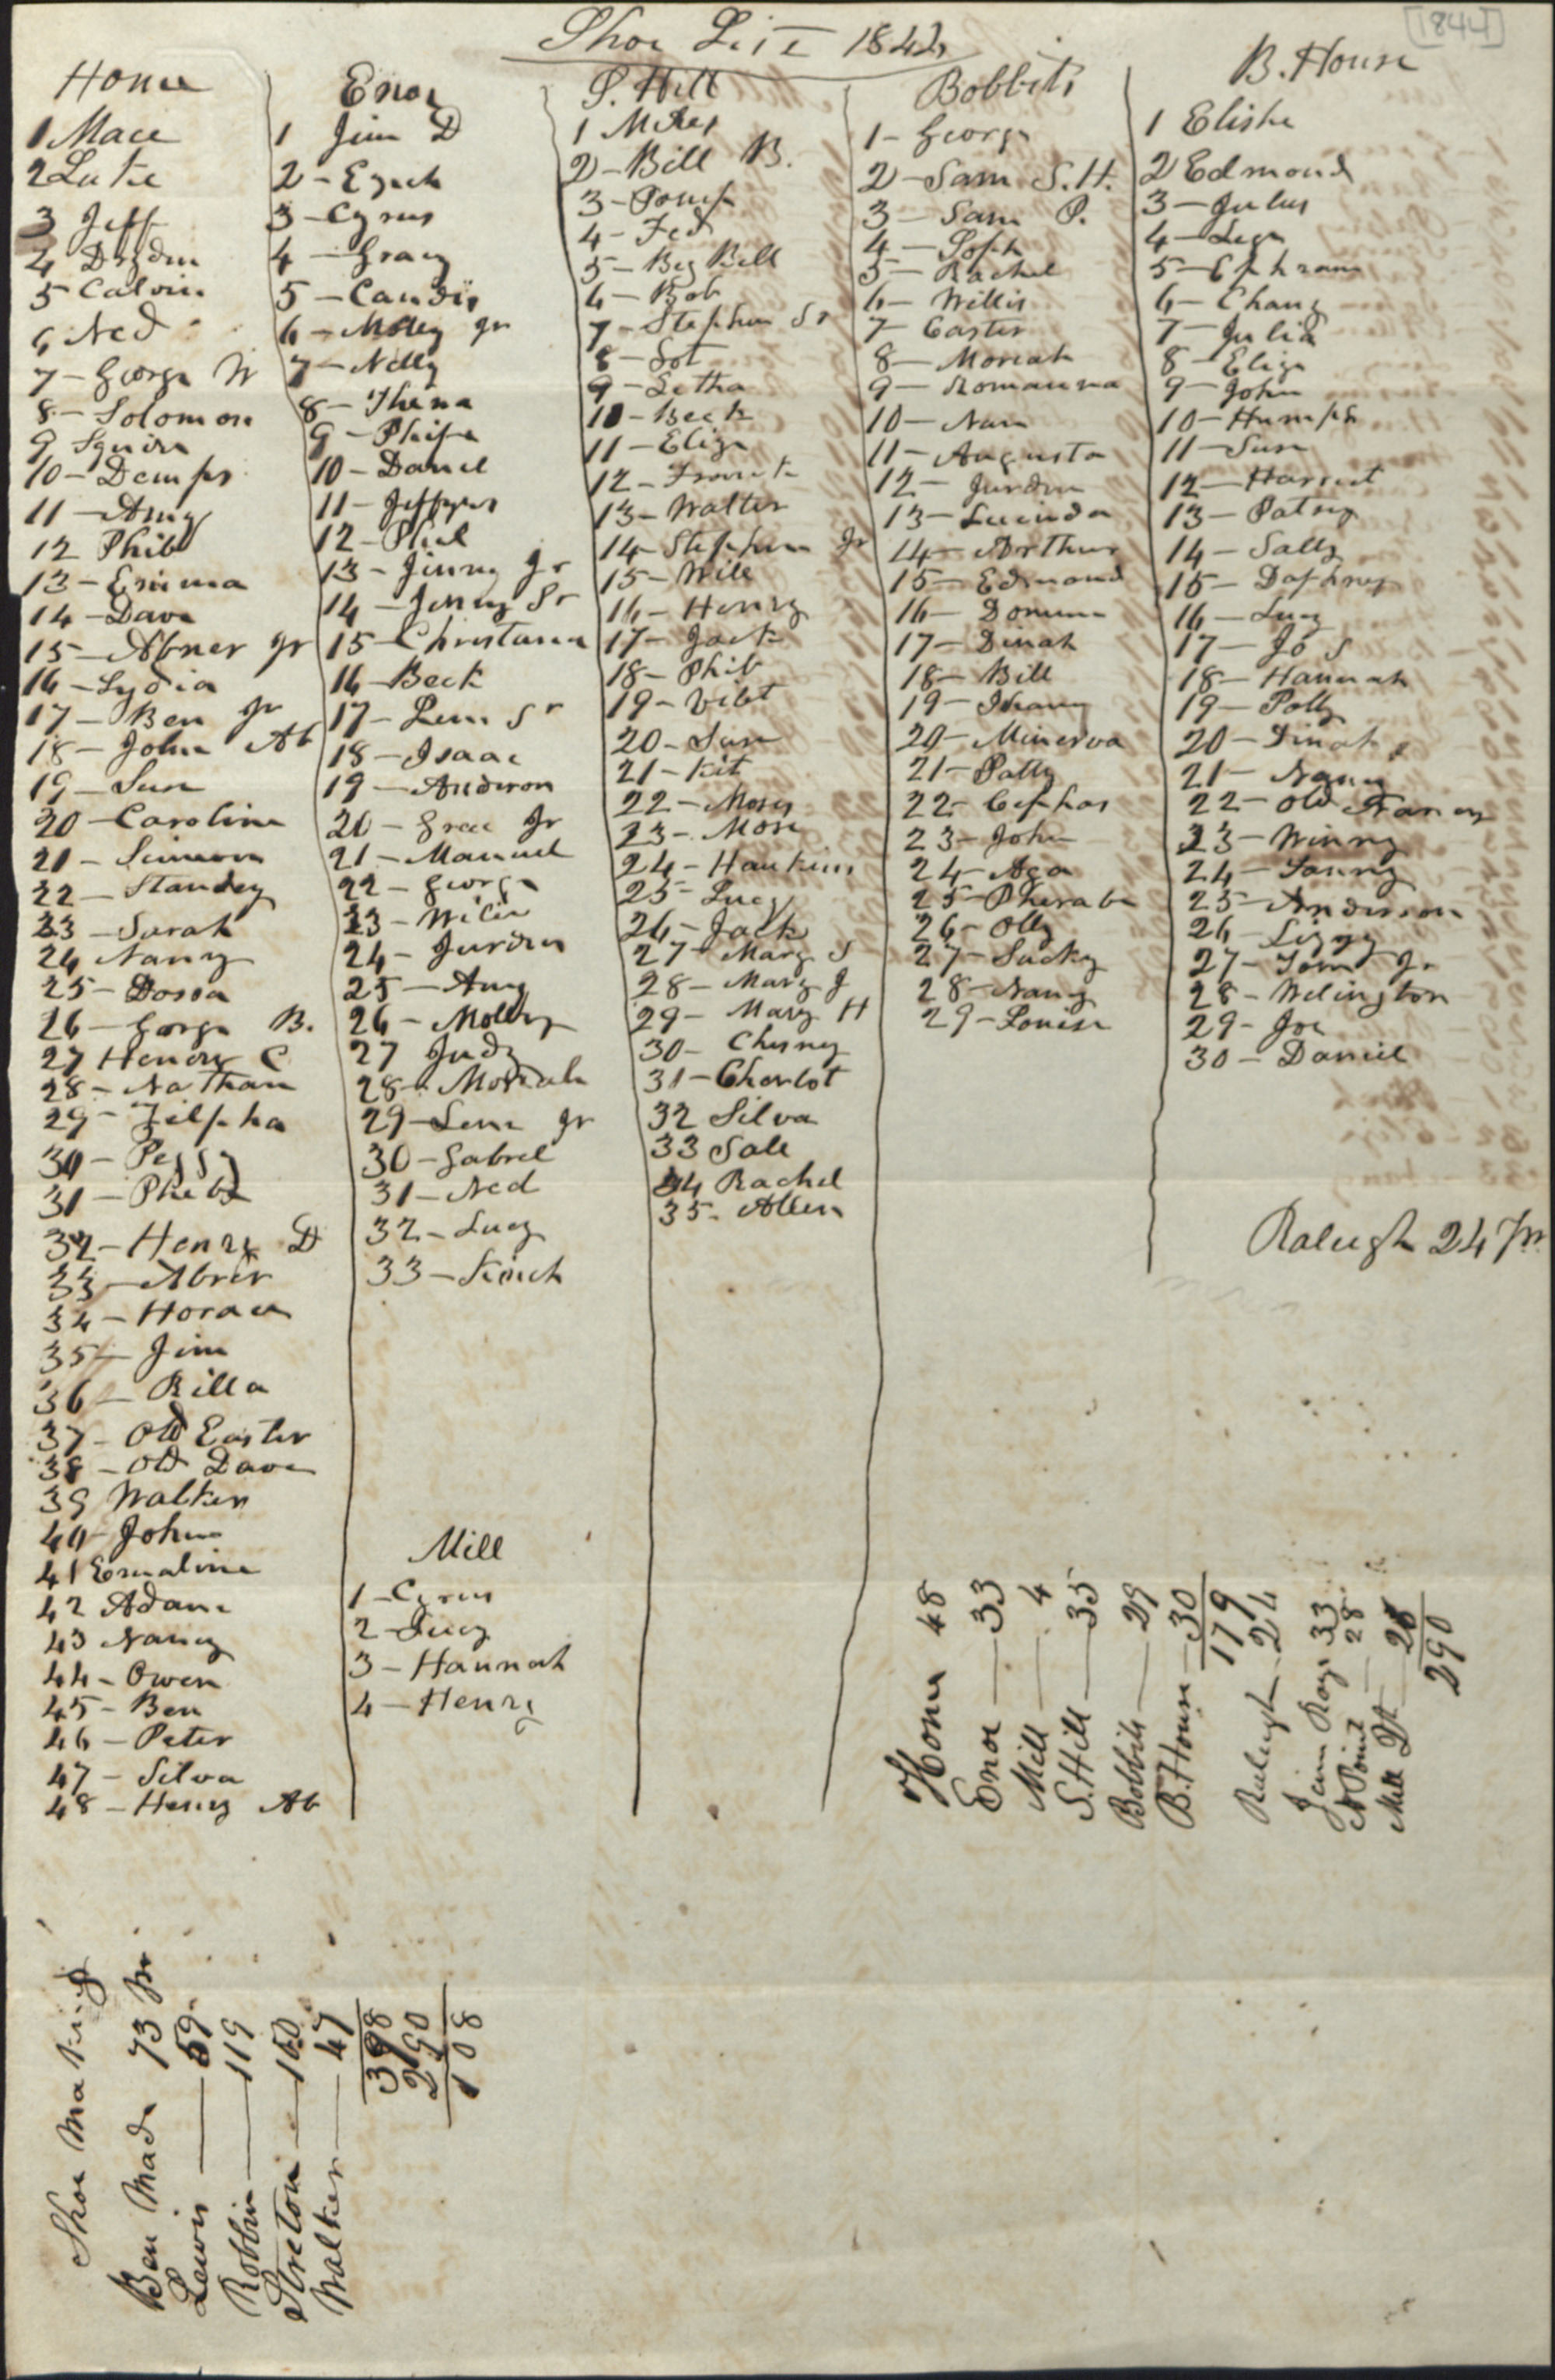 List of slaves on Cameron family plantation